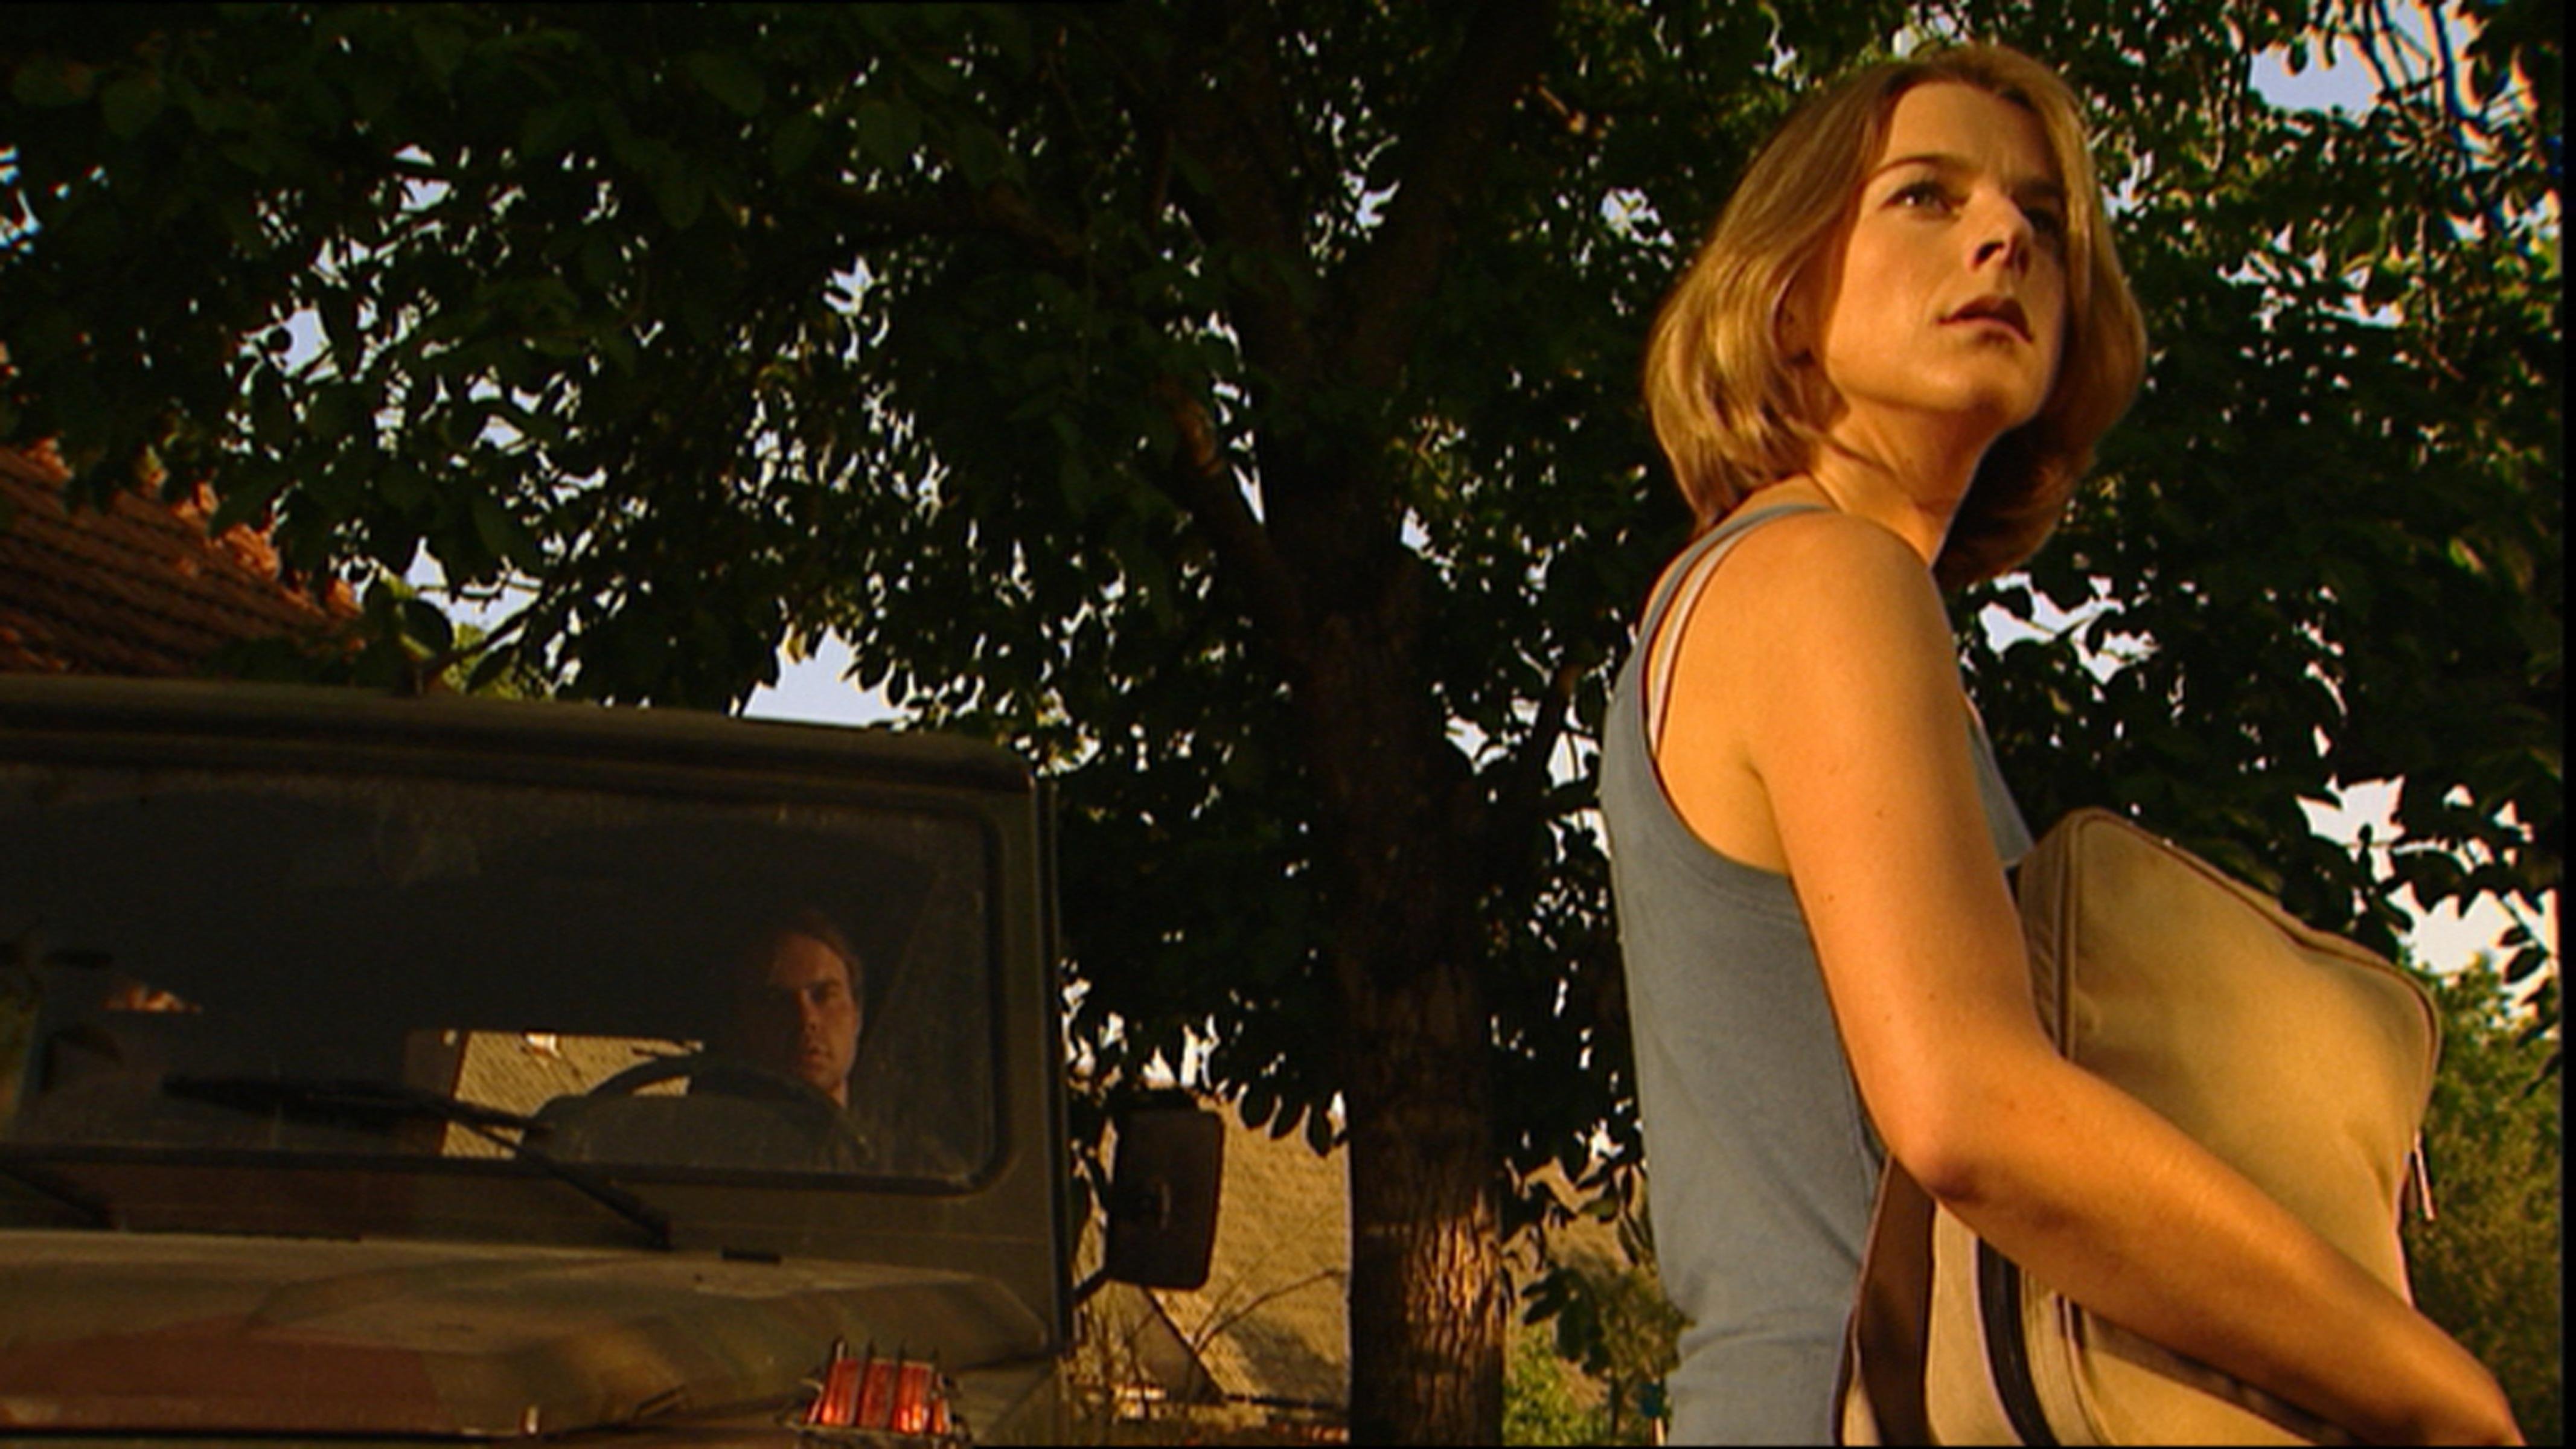 Selestenje (Rustling Landscapes) - image from the film - Barbara Cerar as Katarina (front right) and Grega Zorc as Primoz (back left)